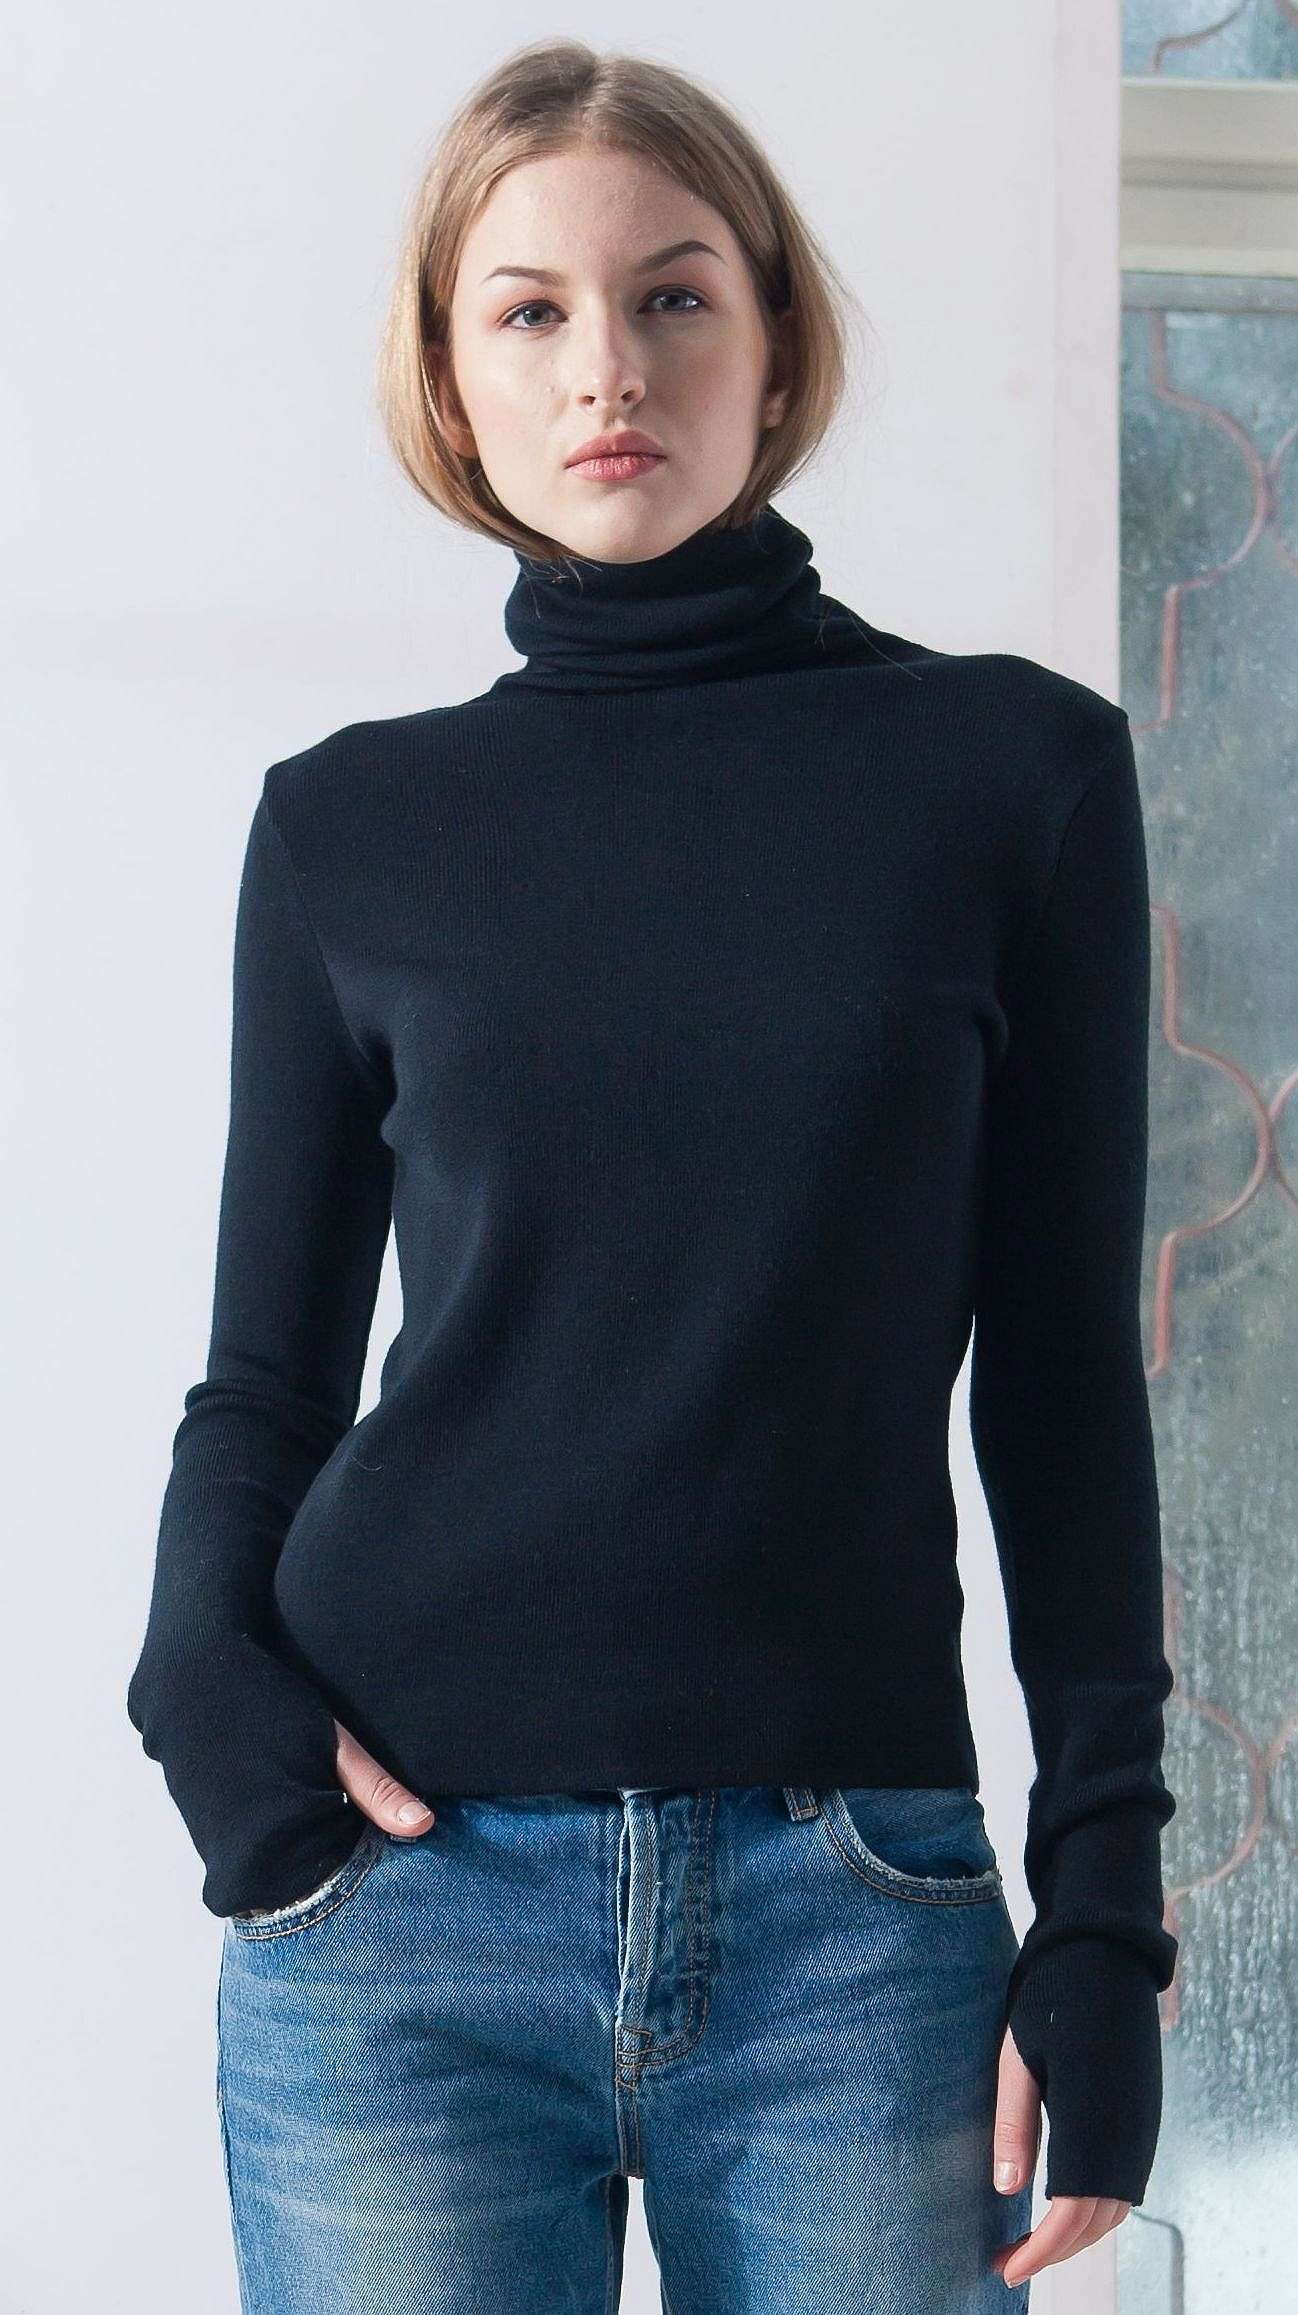 Black turtleneck sweater ADA - Krista Elsta